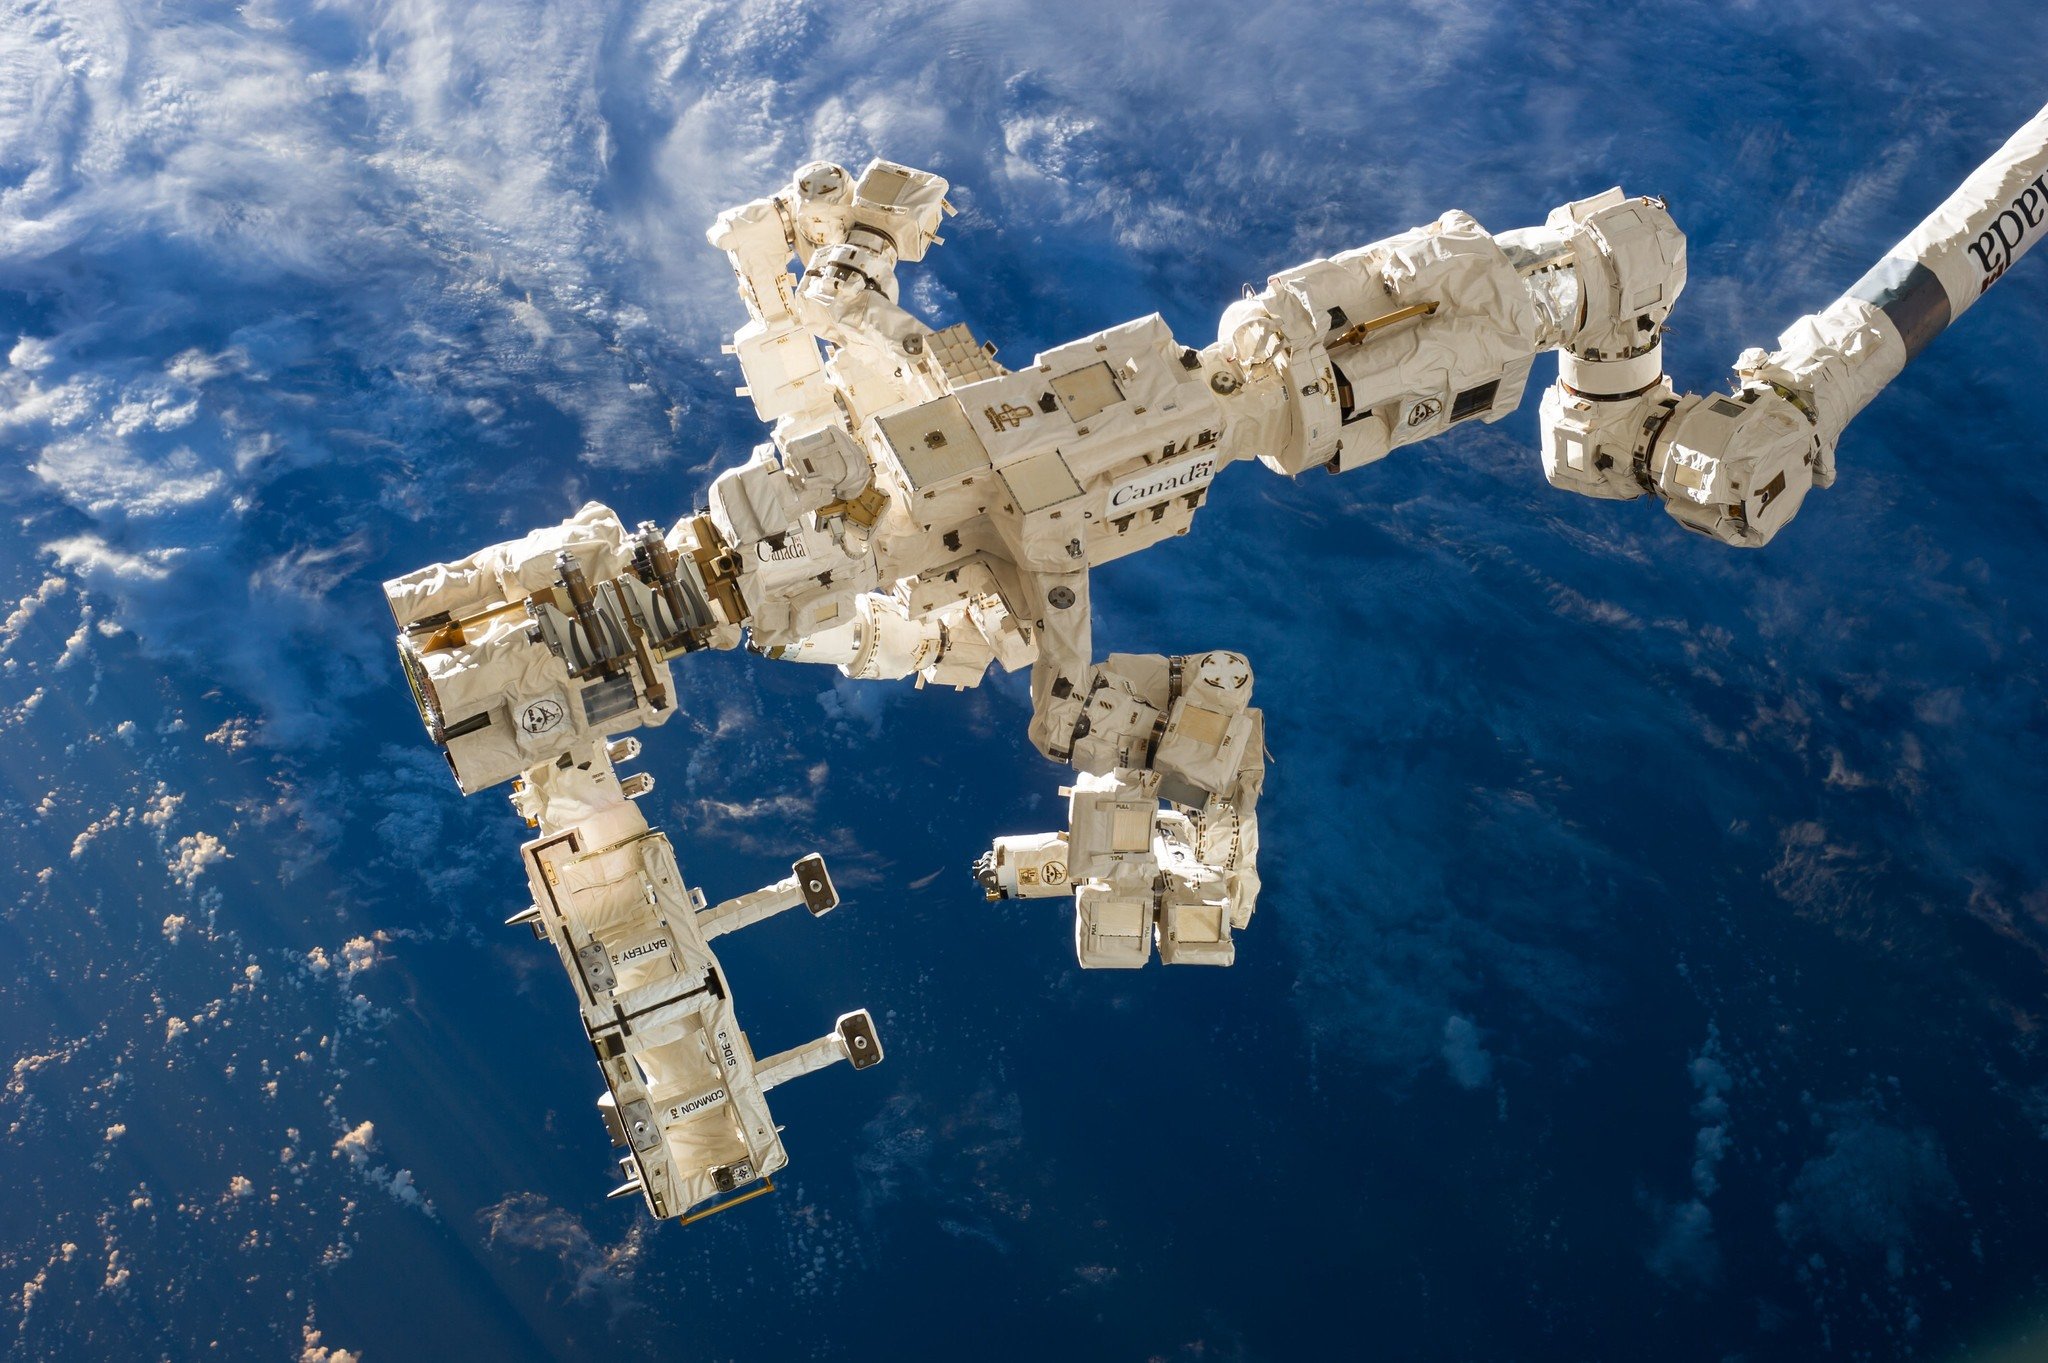 tour international space station